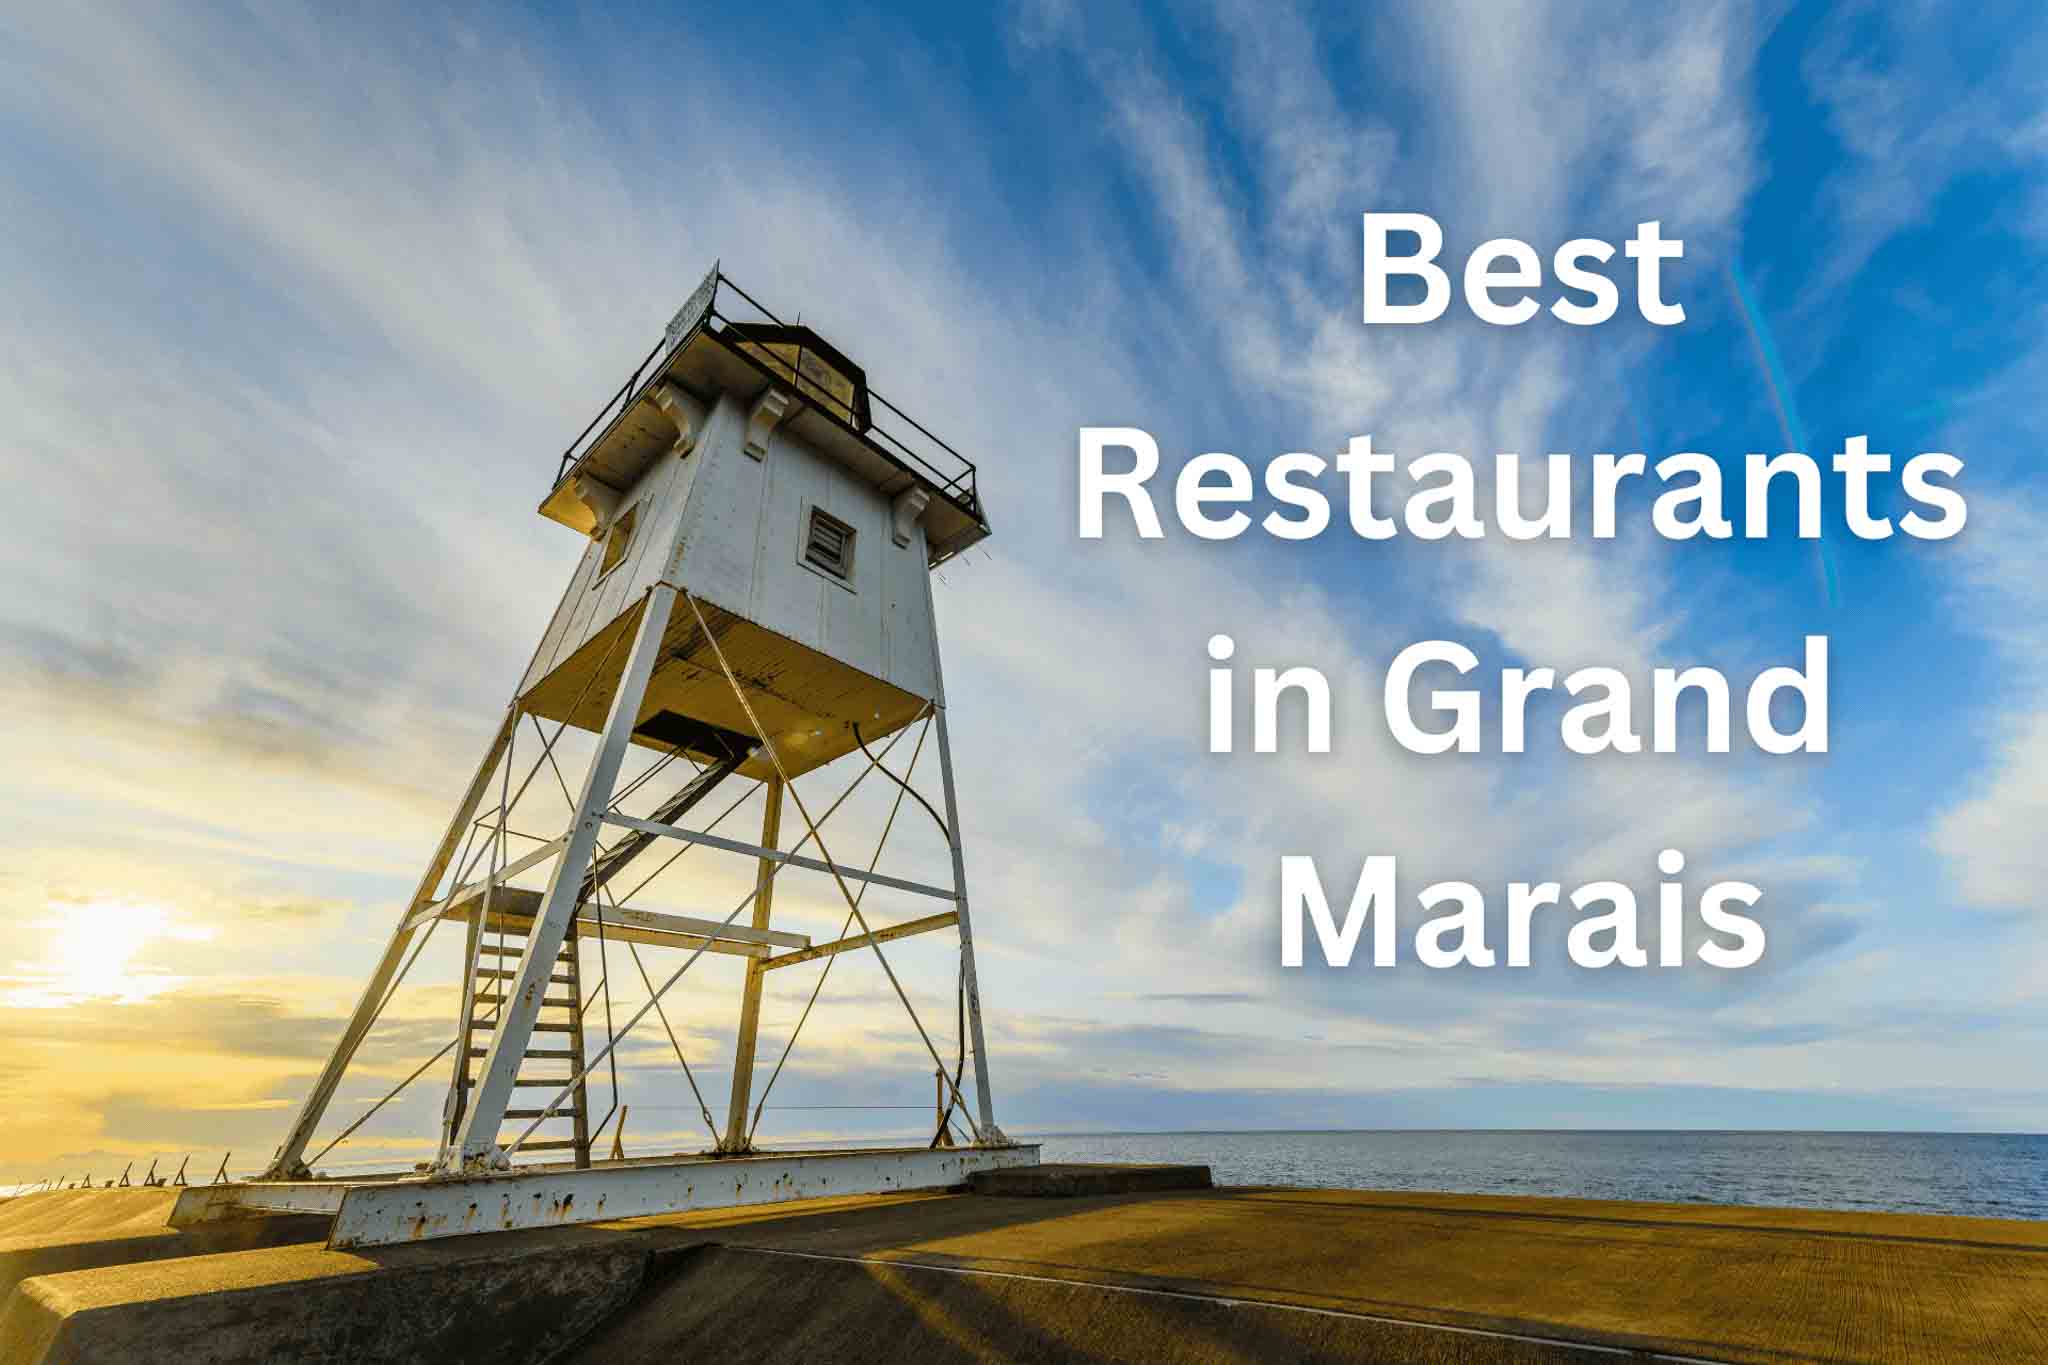 The best Restaurants in Grand Marais, MN